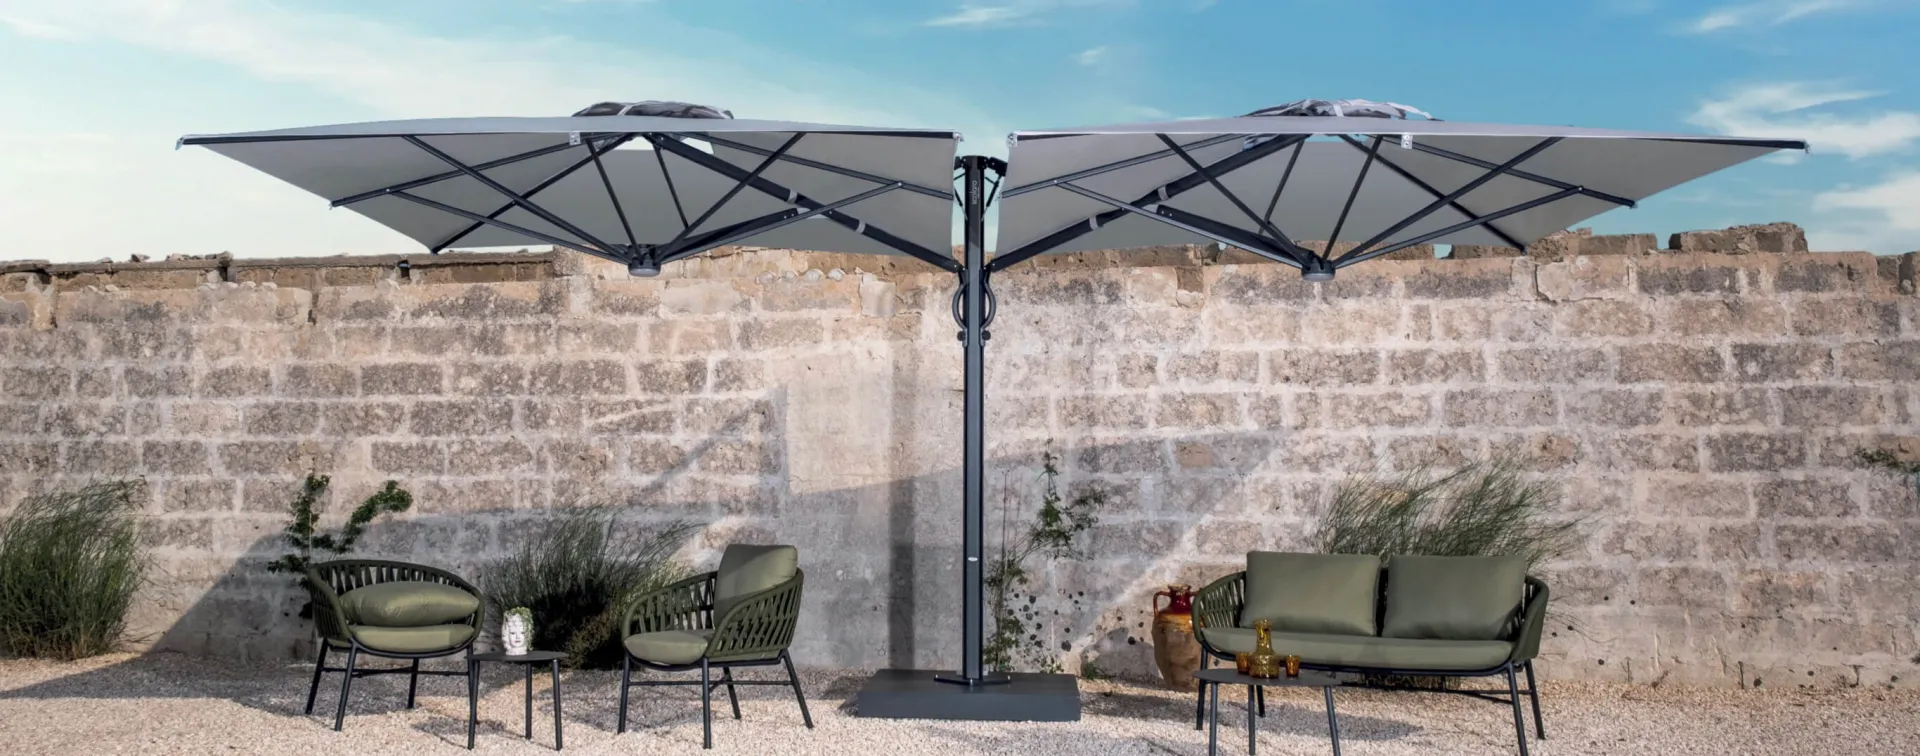 Garden Umbrellas Parasols design from italy | Scolaro's products